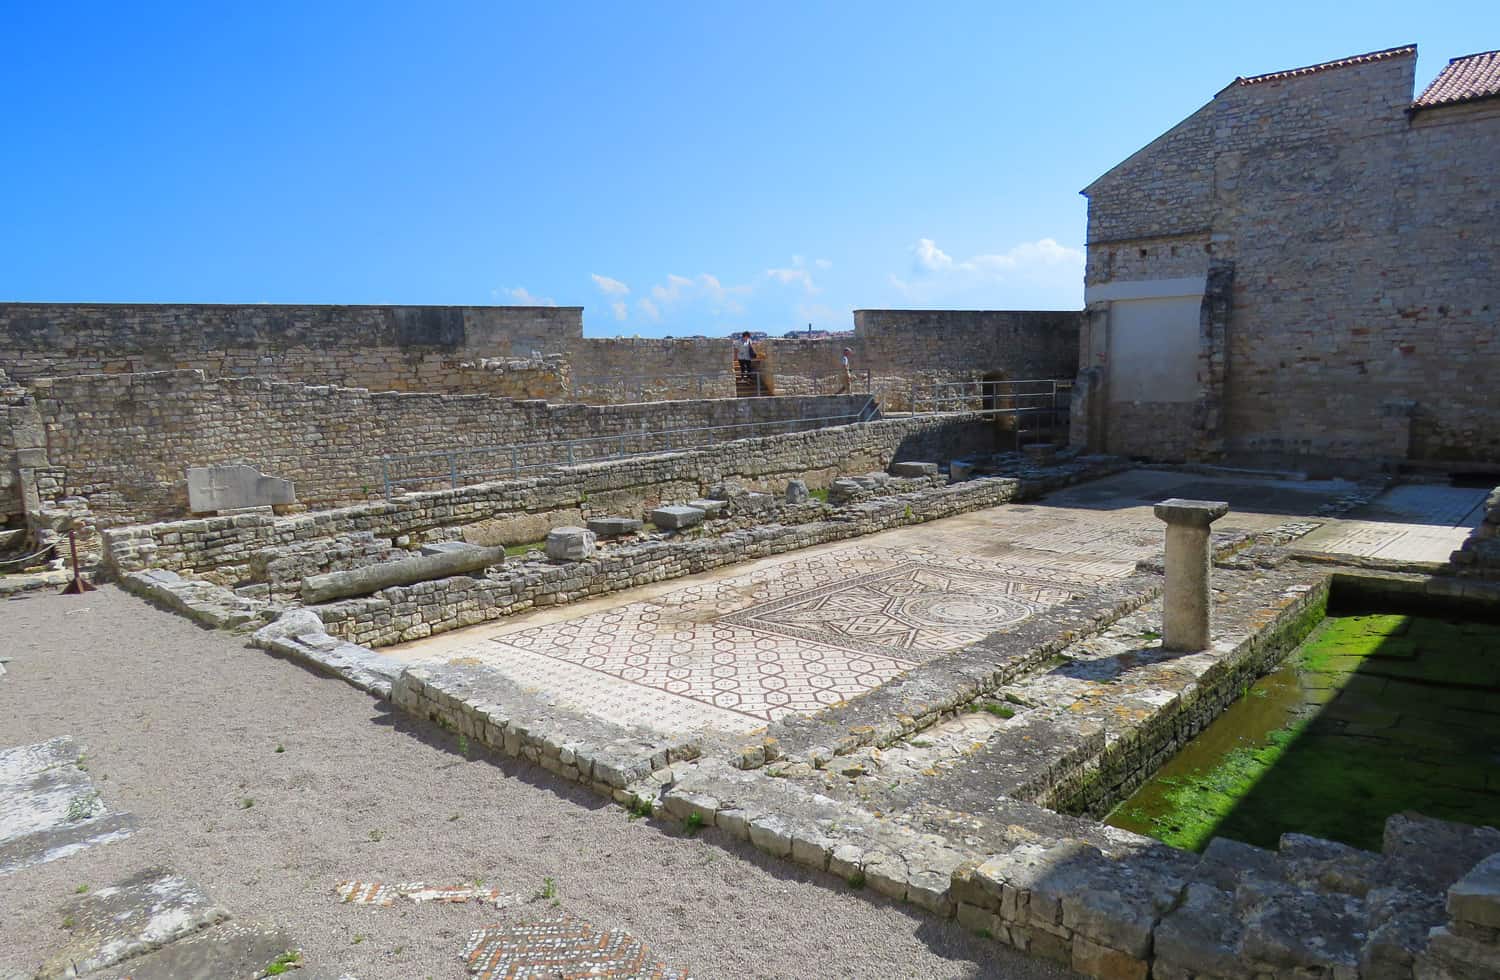 Porec's UNESCO World Heritage Site - the Euphrasian Basilica